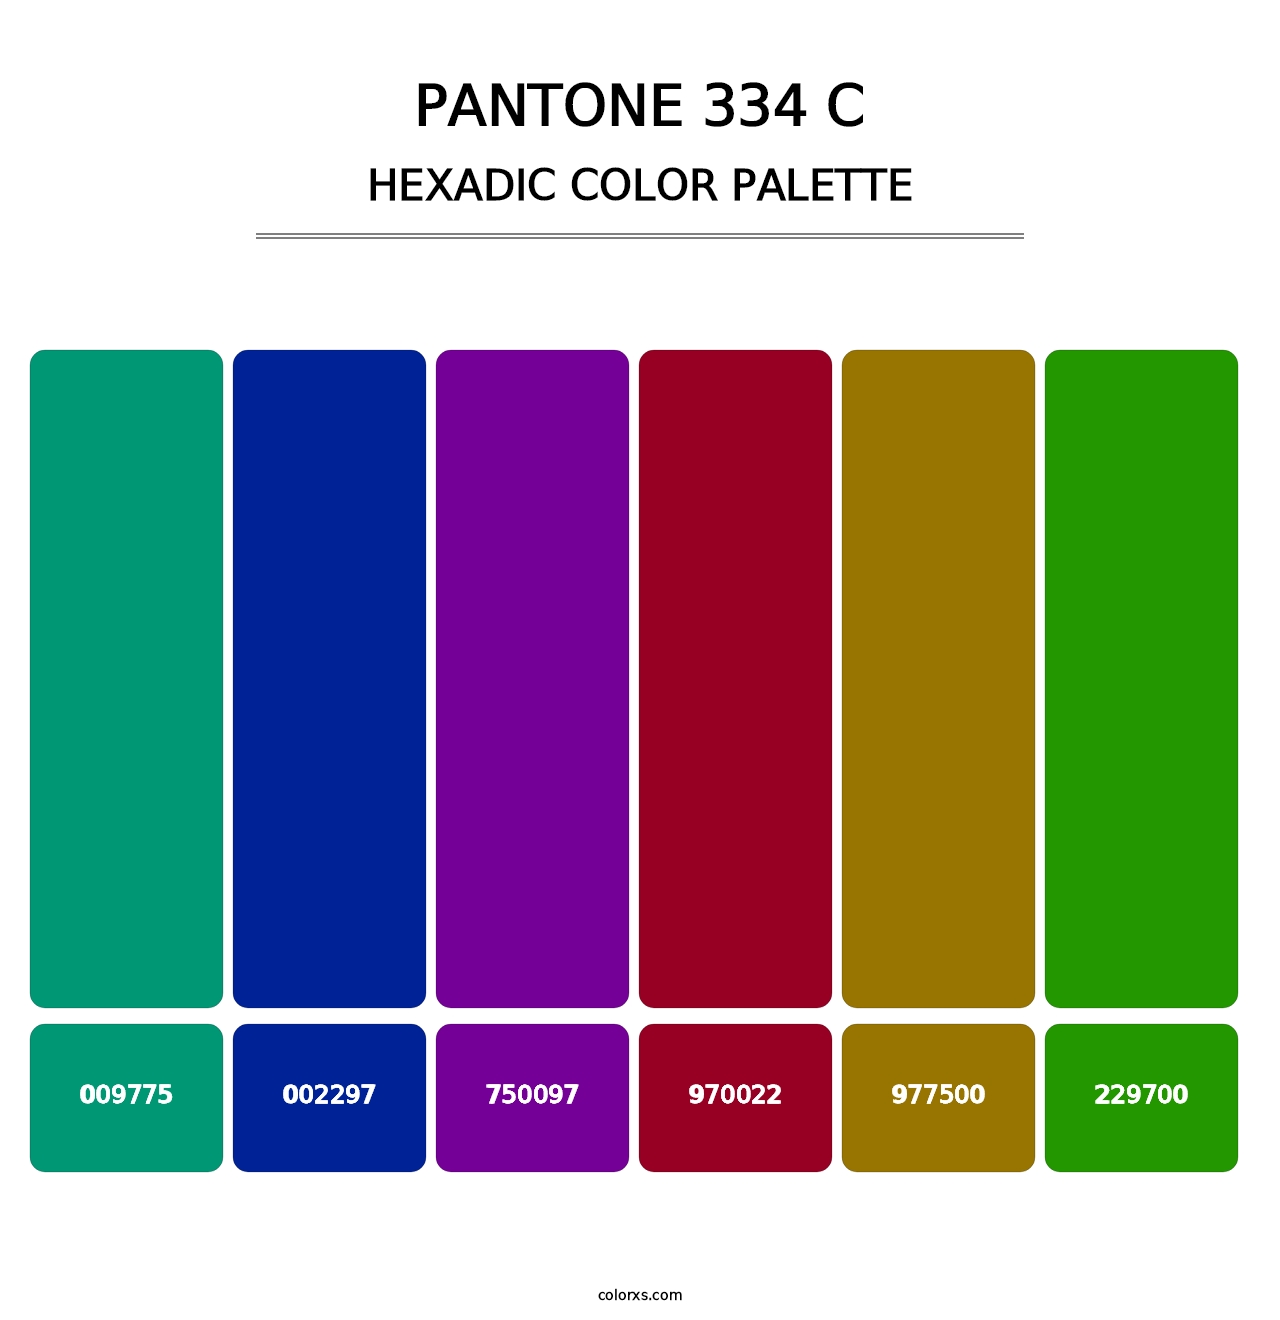 PANTONE 334 C - Hexadic Color Palette